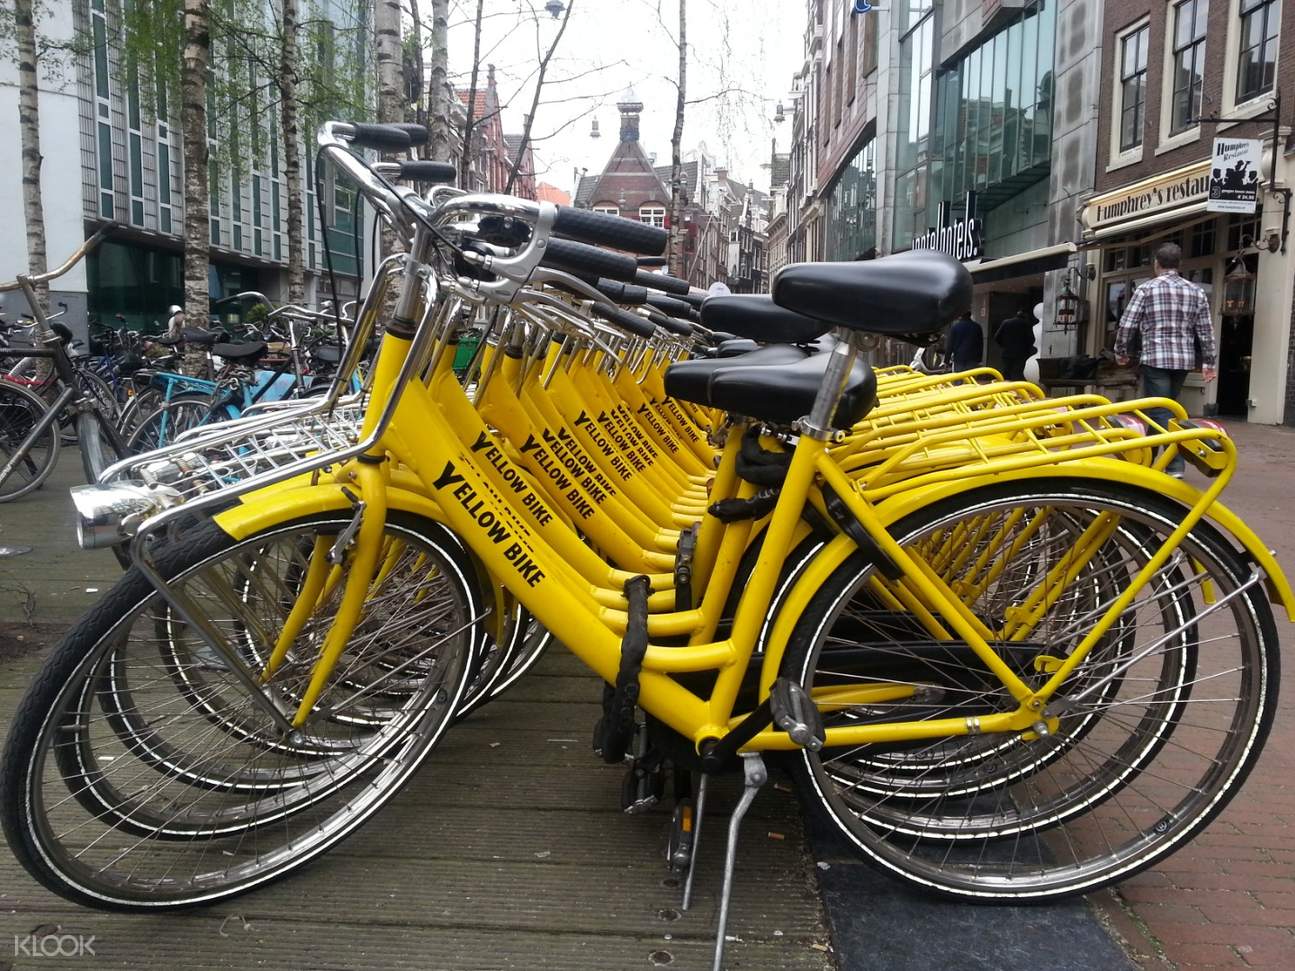 Bike Rental in Amsterdam, The Netherlands - BikeRentalinAmsterDam